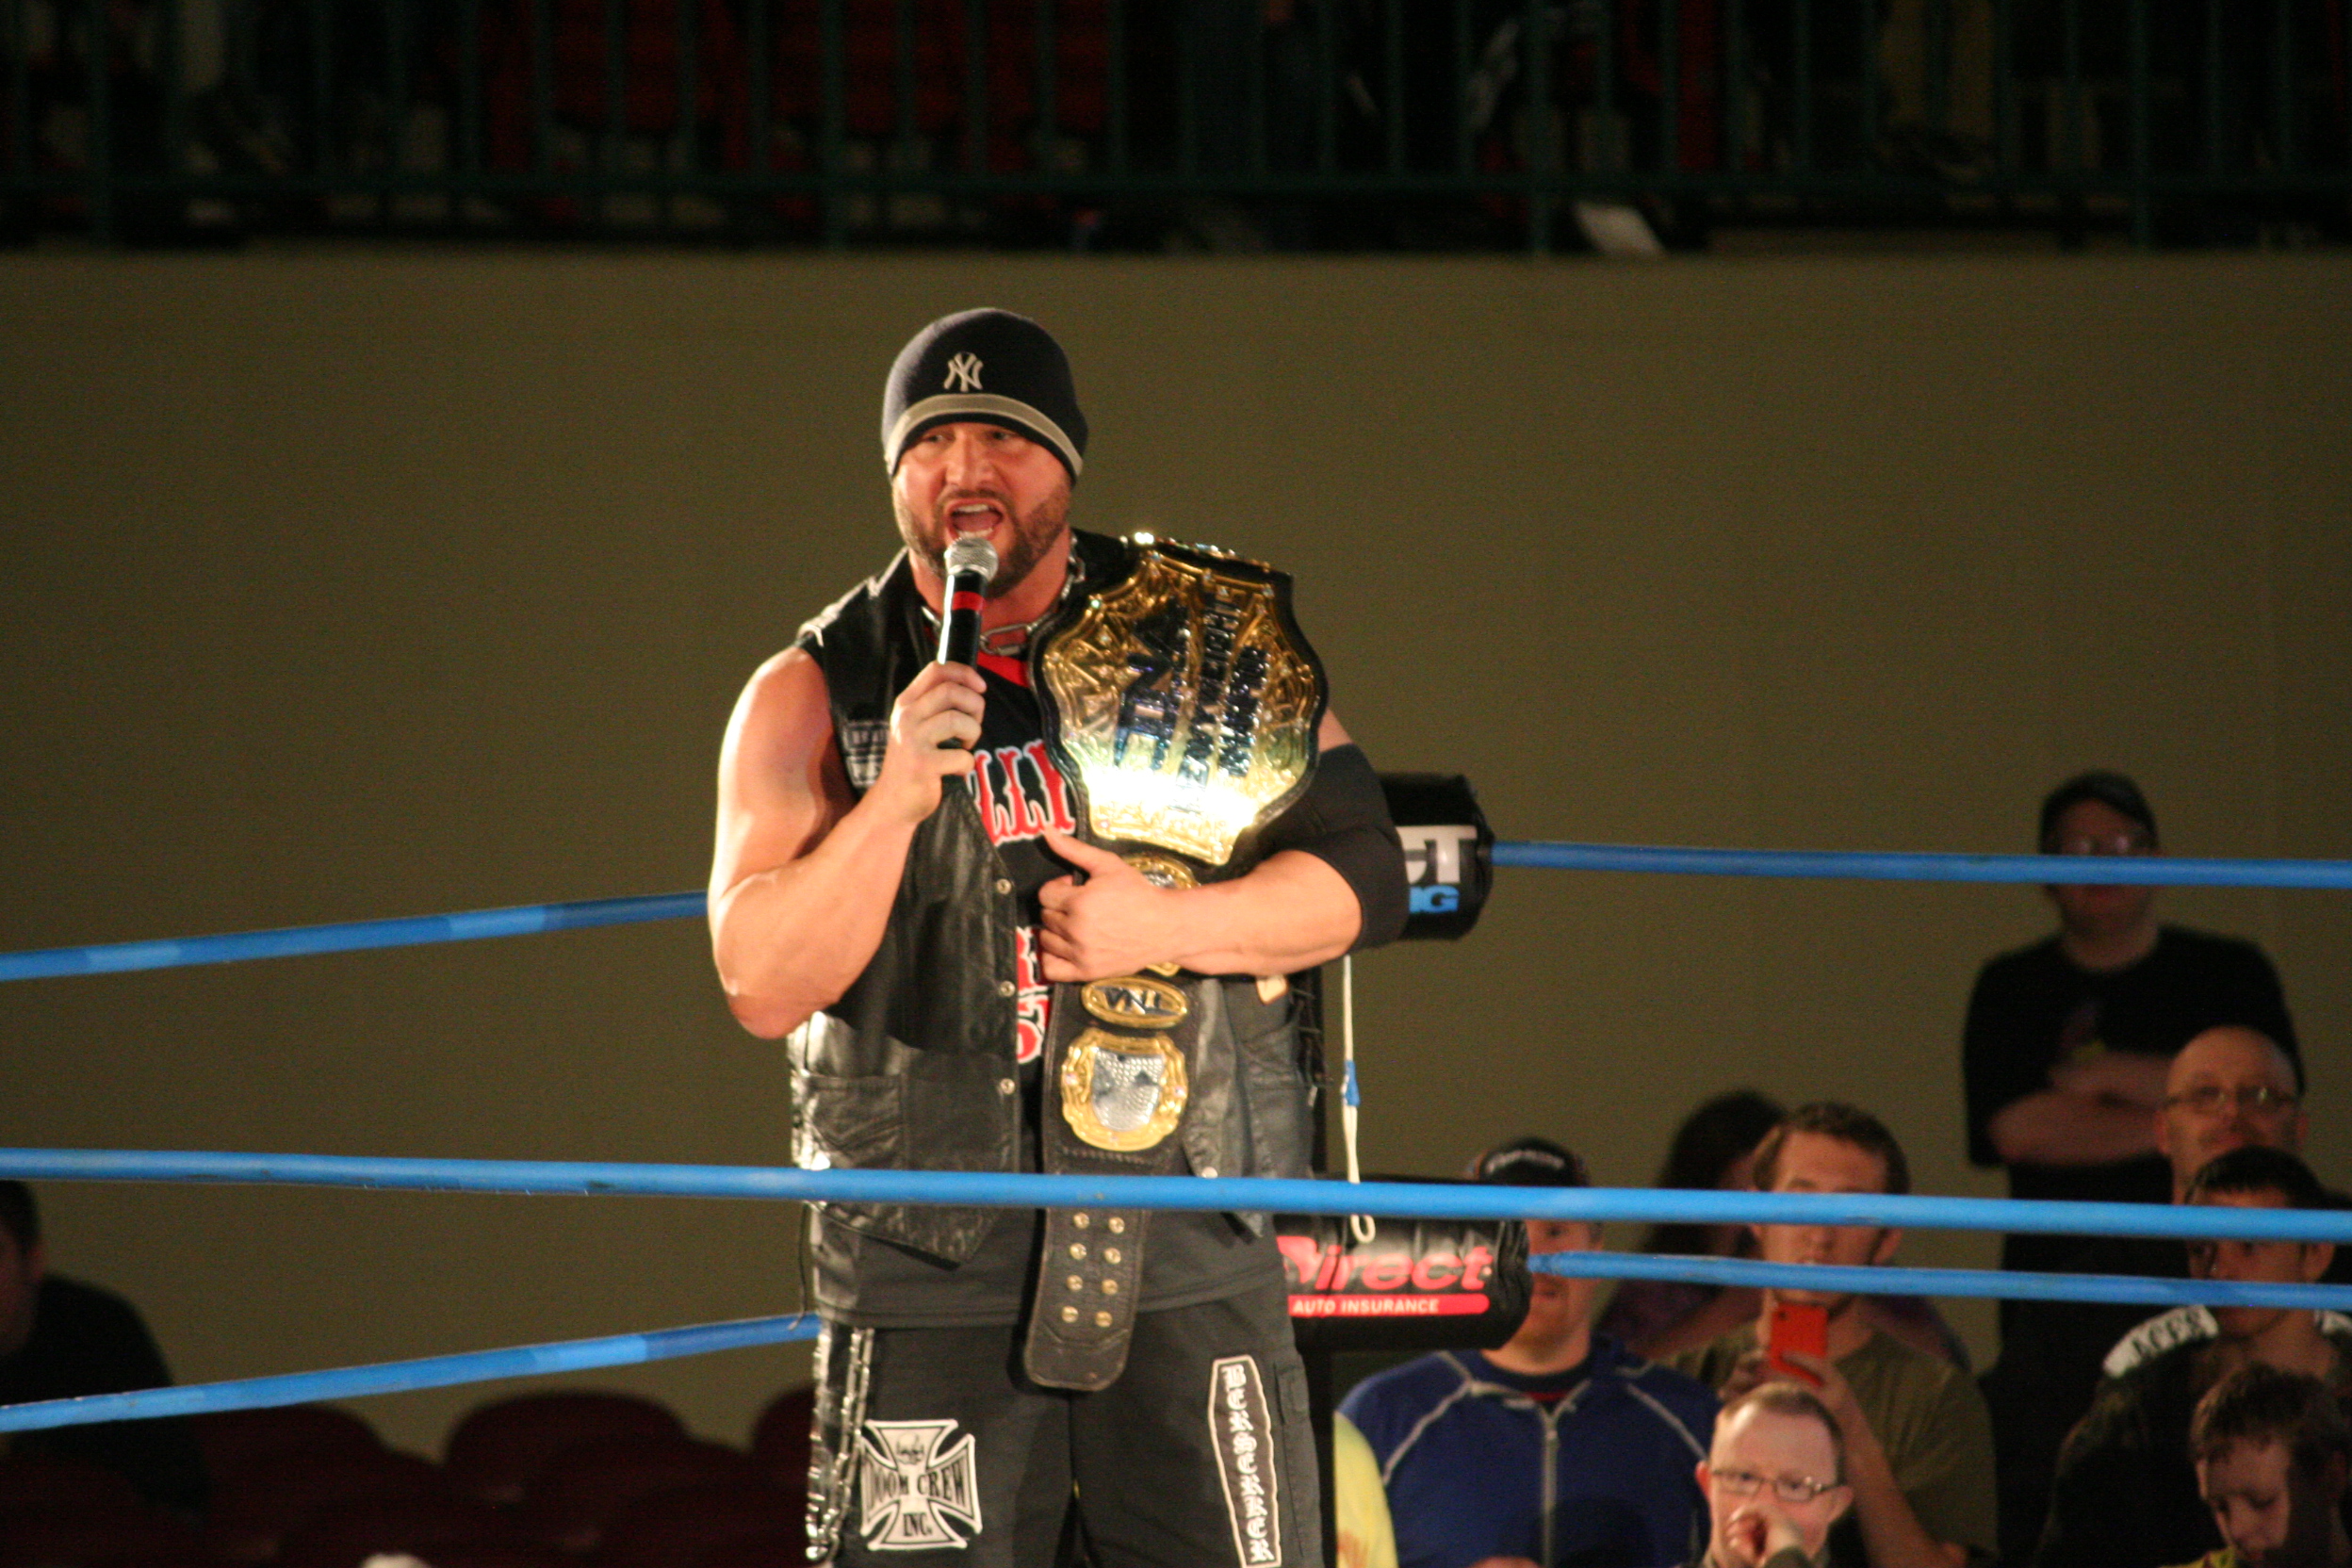 File:TNA Champion Bully 2.jpg - Wikimedia Commons